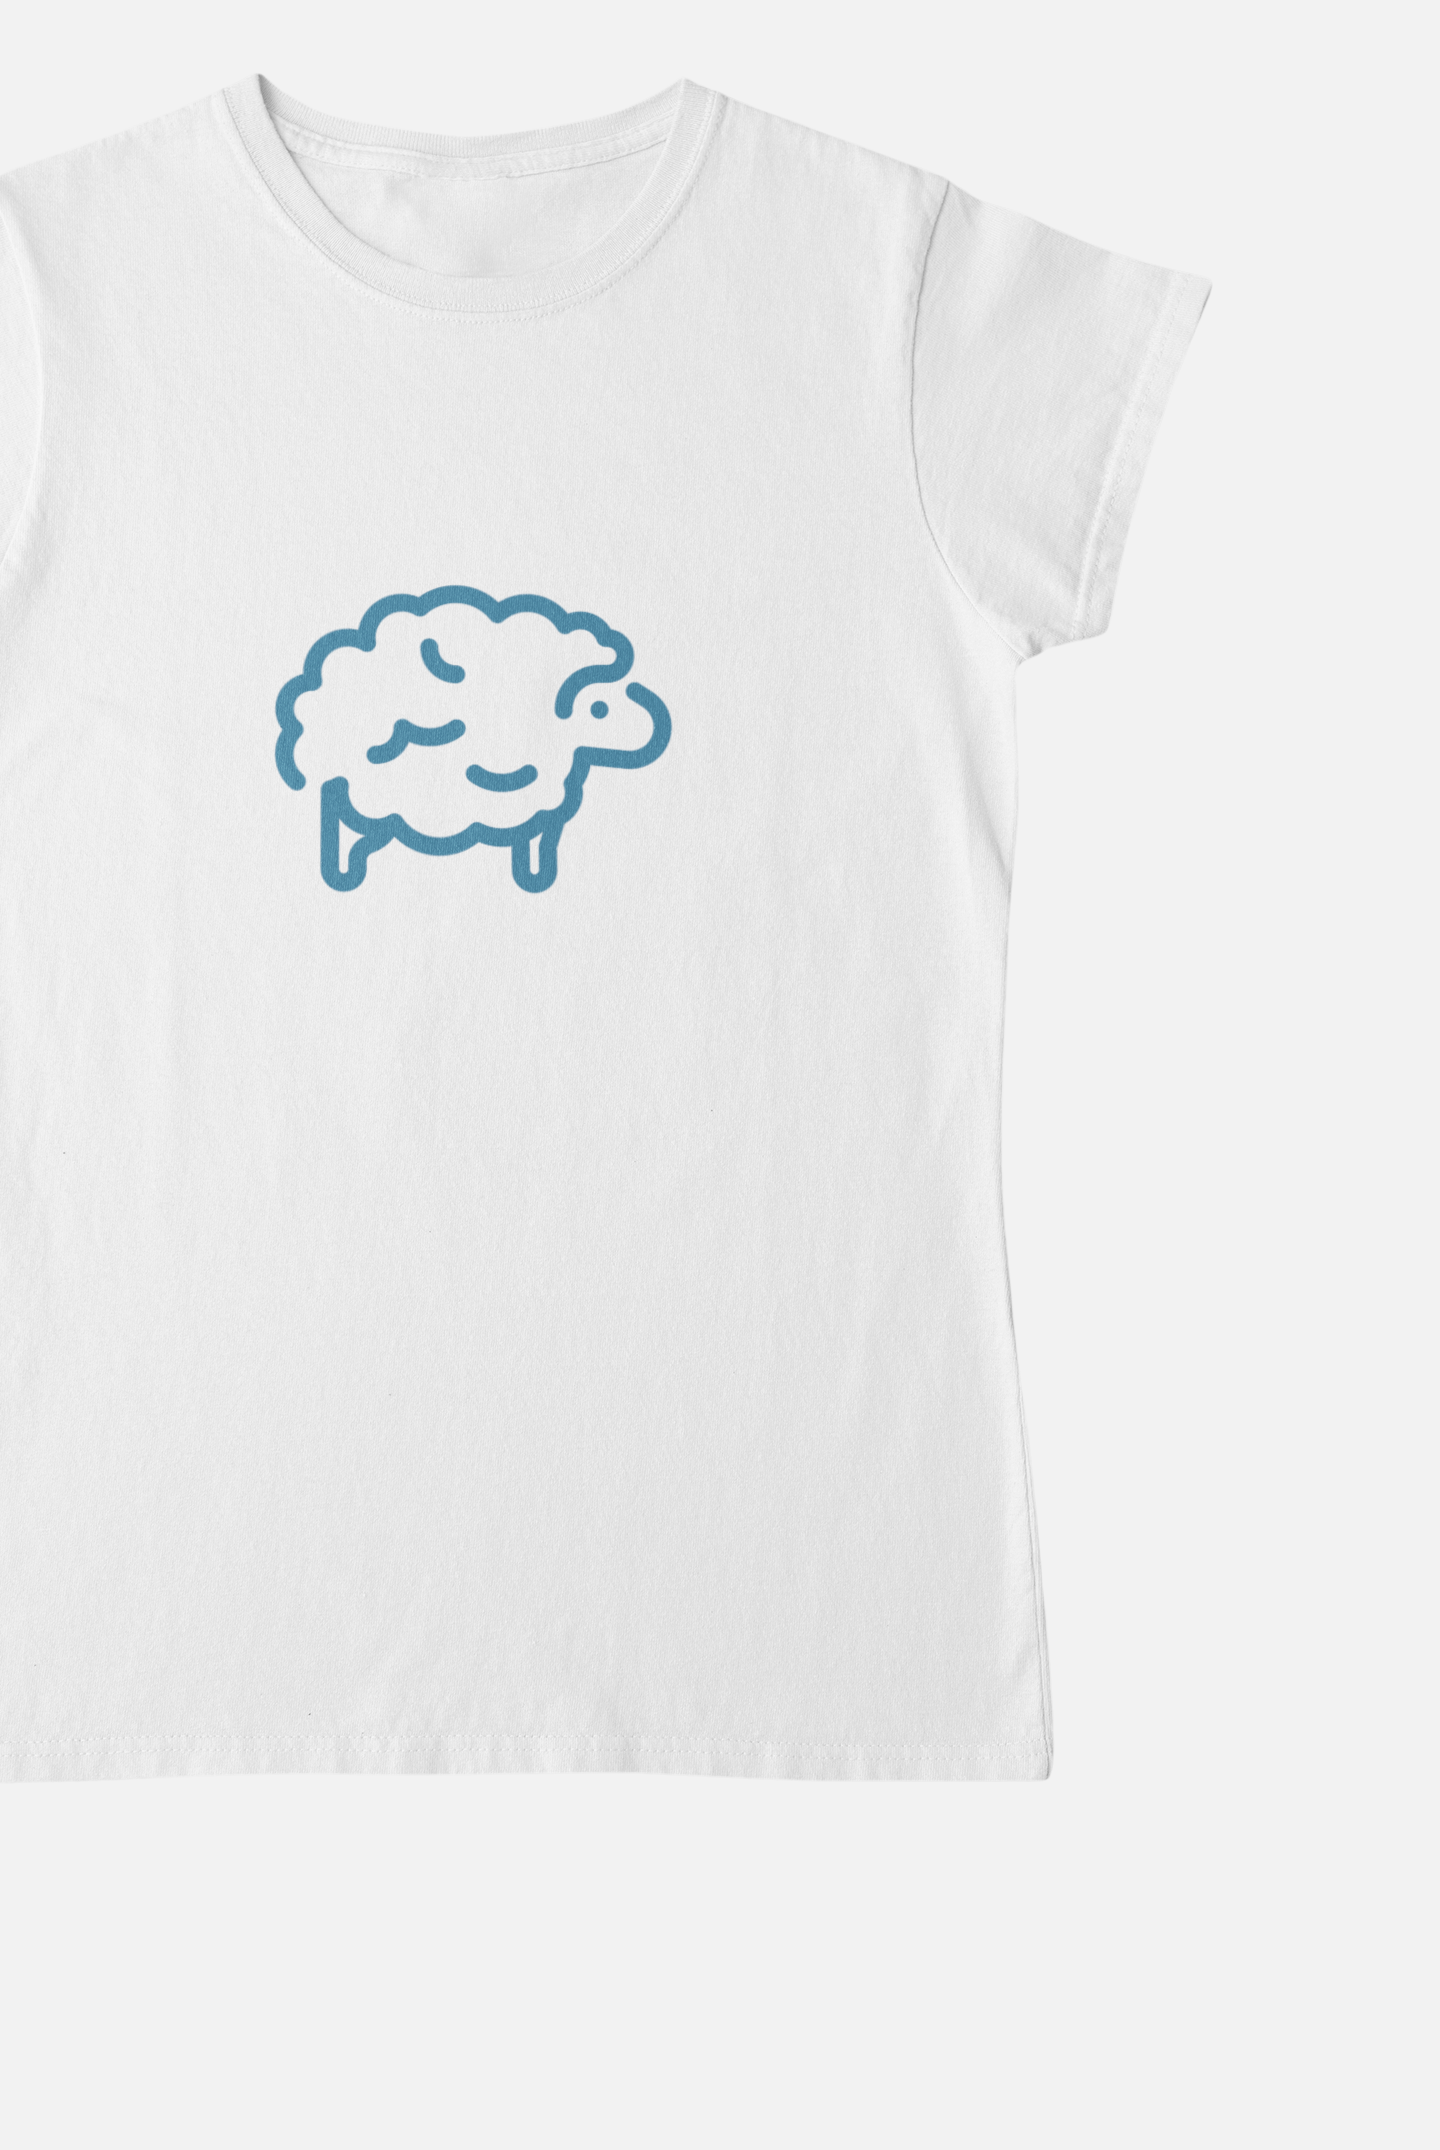 Sheep White Round Neck T-Shirt for Women